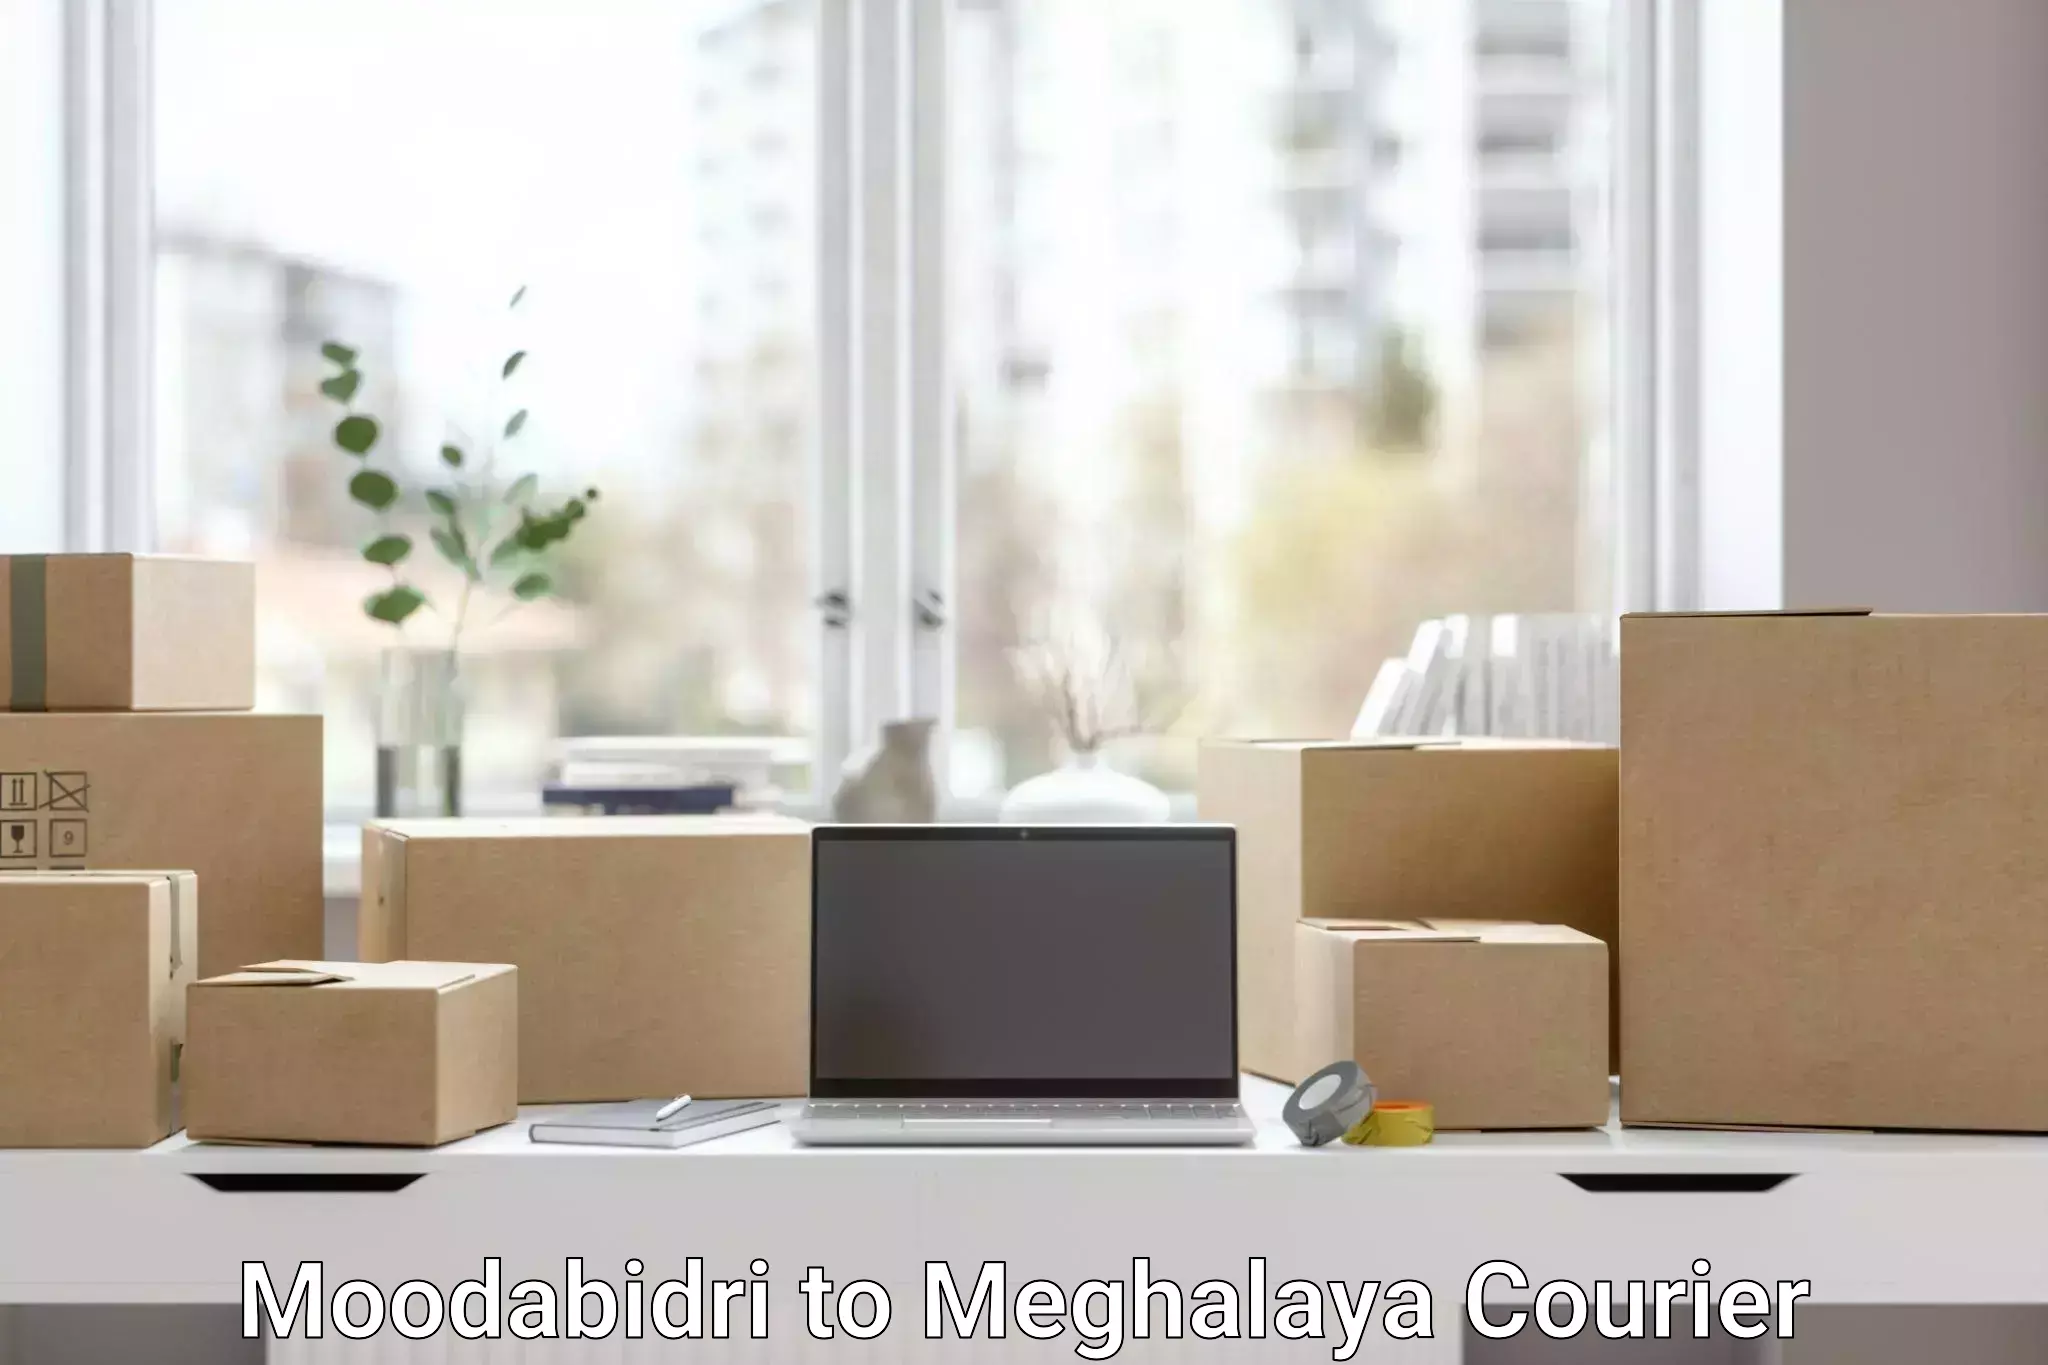 Business delivery service Moodabidri to East Khasi Hills